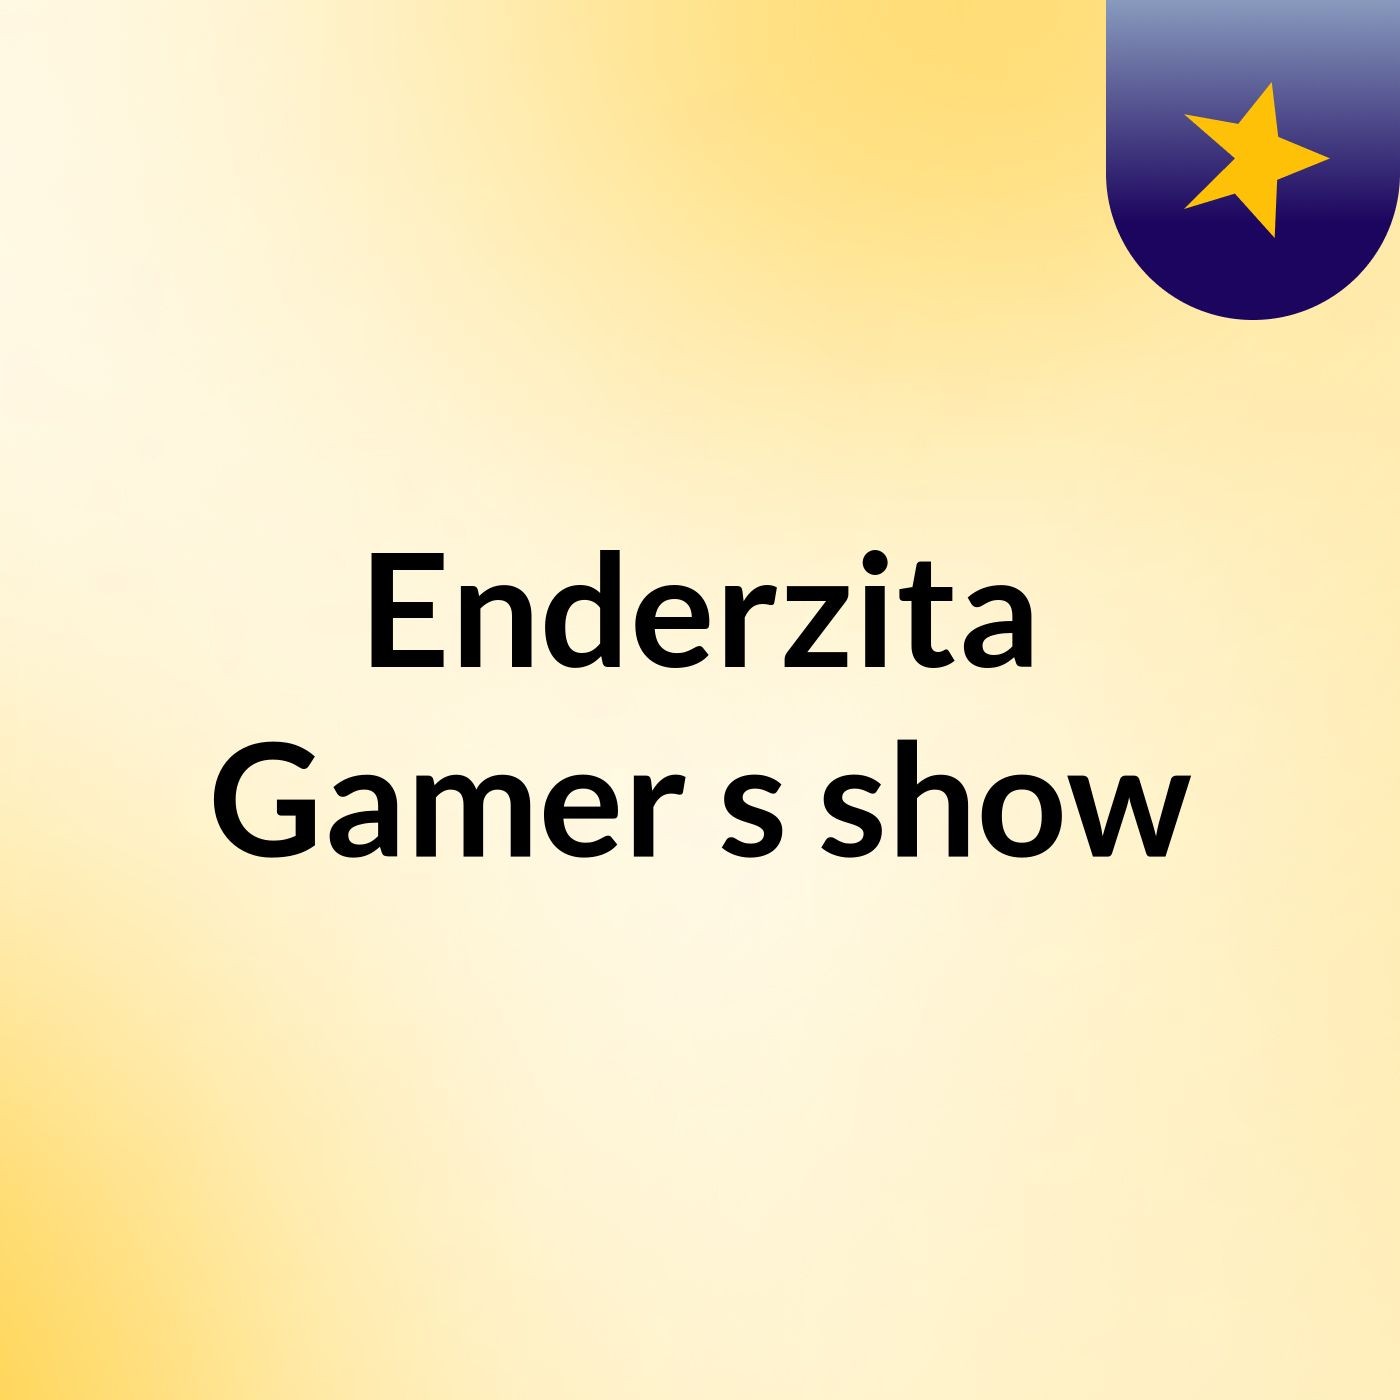 Enderzita Gamer's show